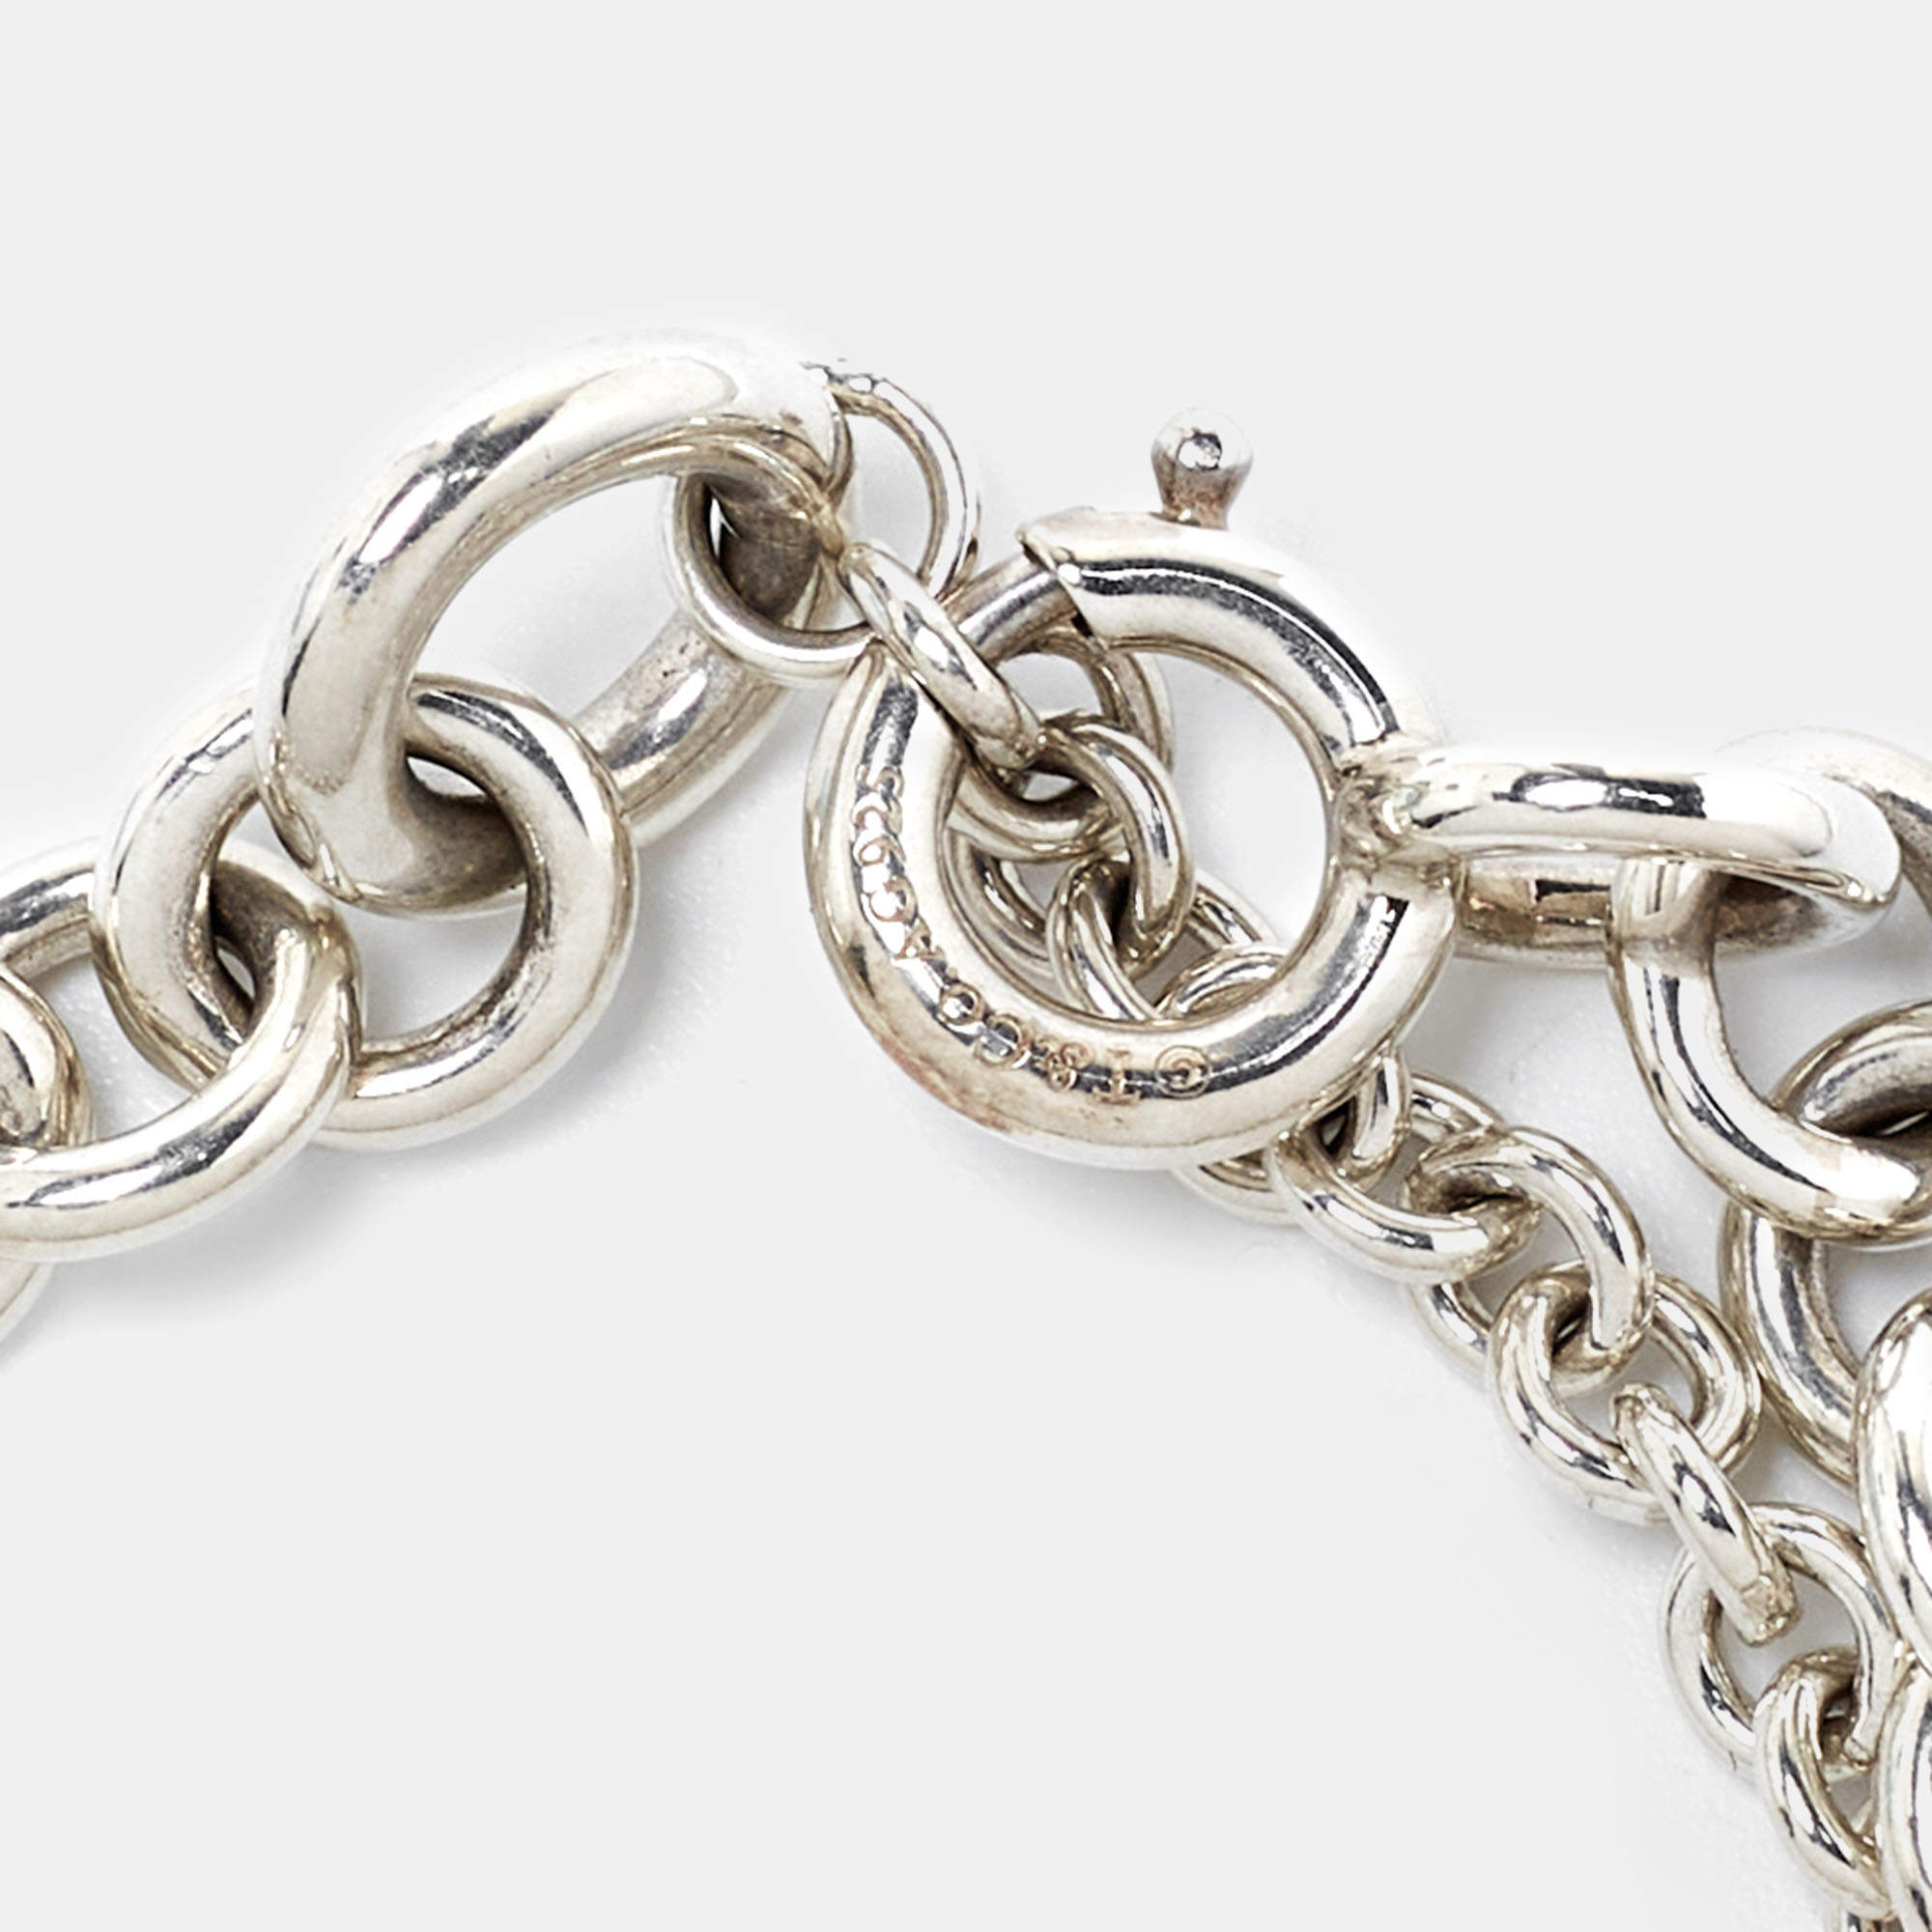 Return to Tiffany® Heart Tag Double Chain Bracelet